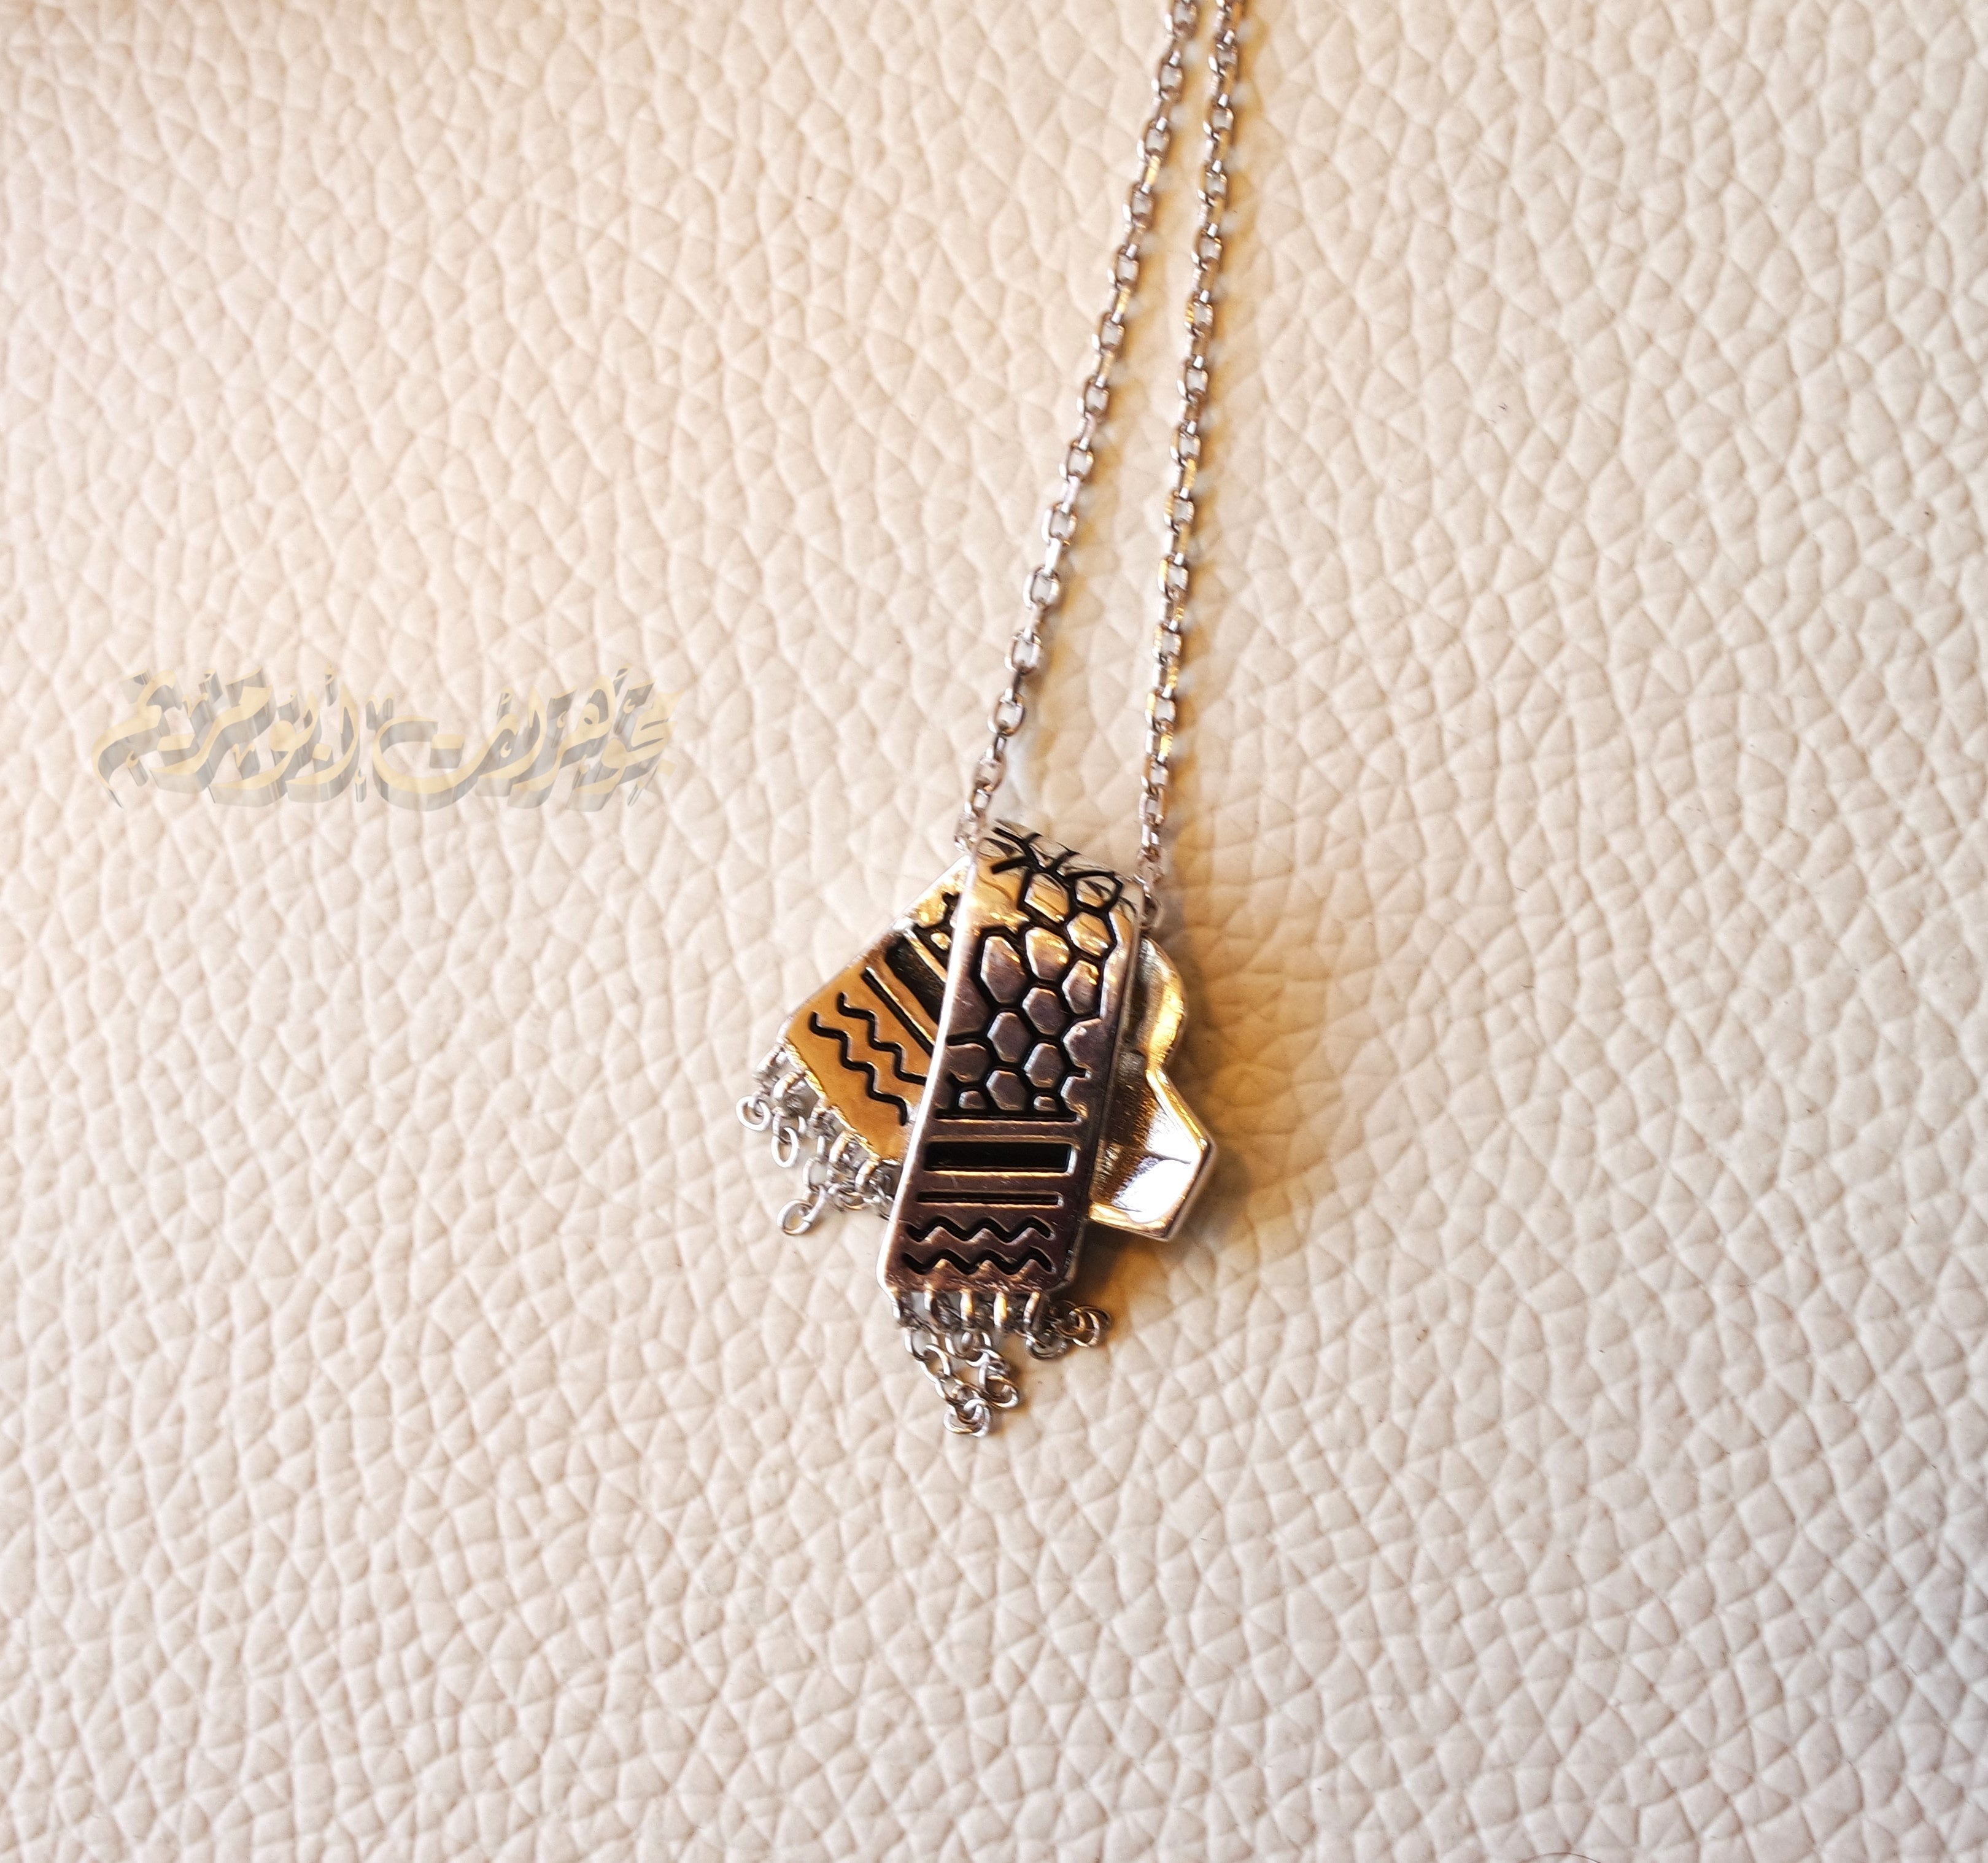 Palestine koufeyeh ِAqsa necklace sterling silver 925 high quality jewelry koufyeh Arabic fast shipping  قبة الصخرة كوفية كوفيه خارطه فلسطين